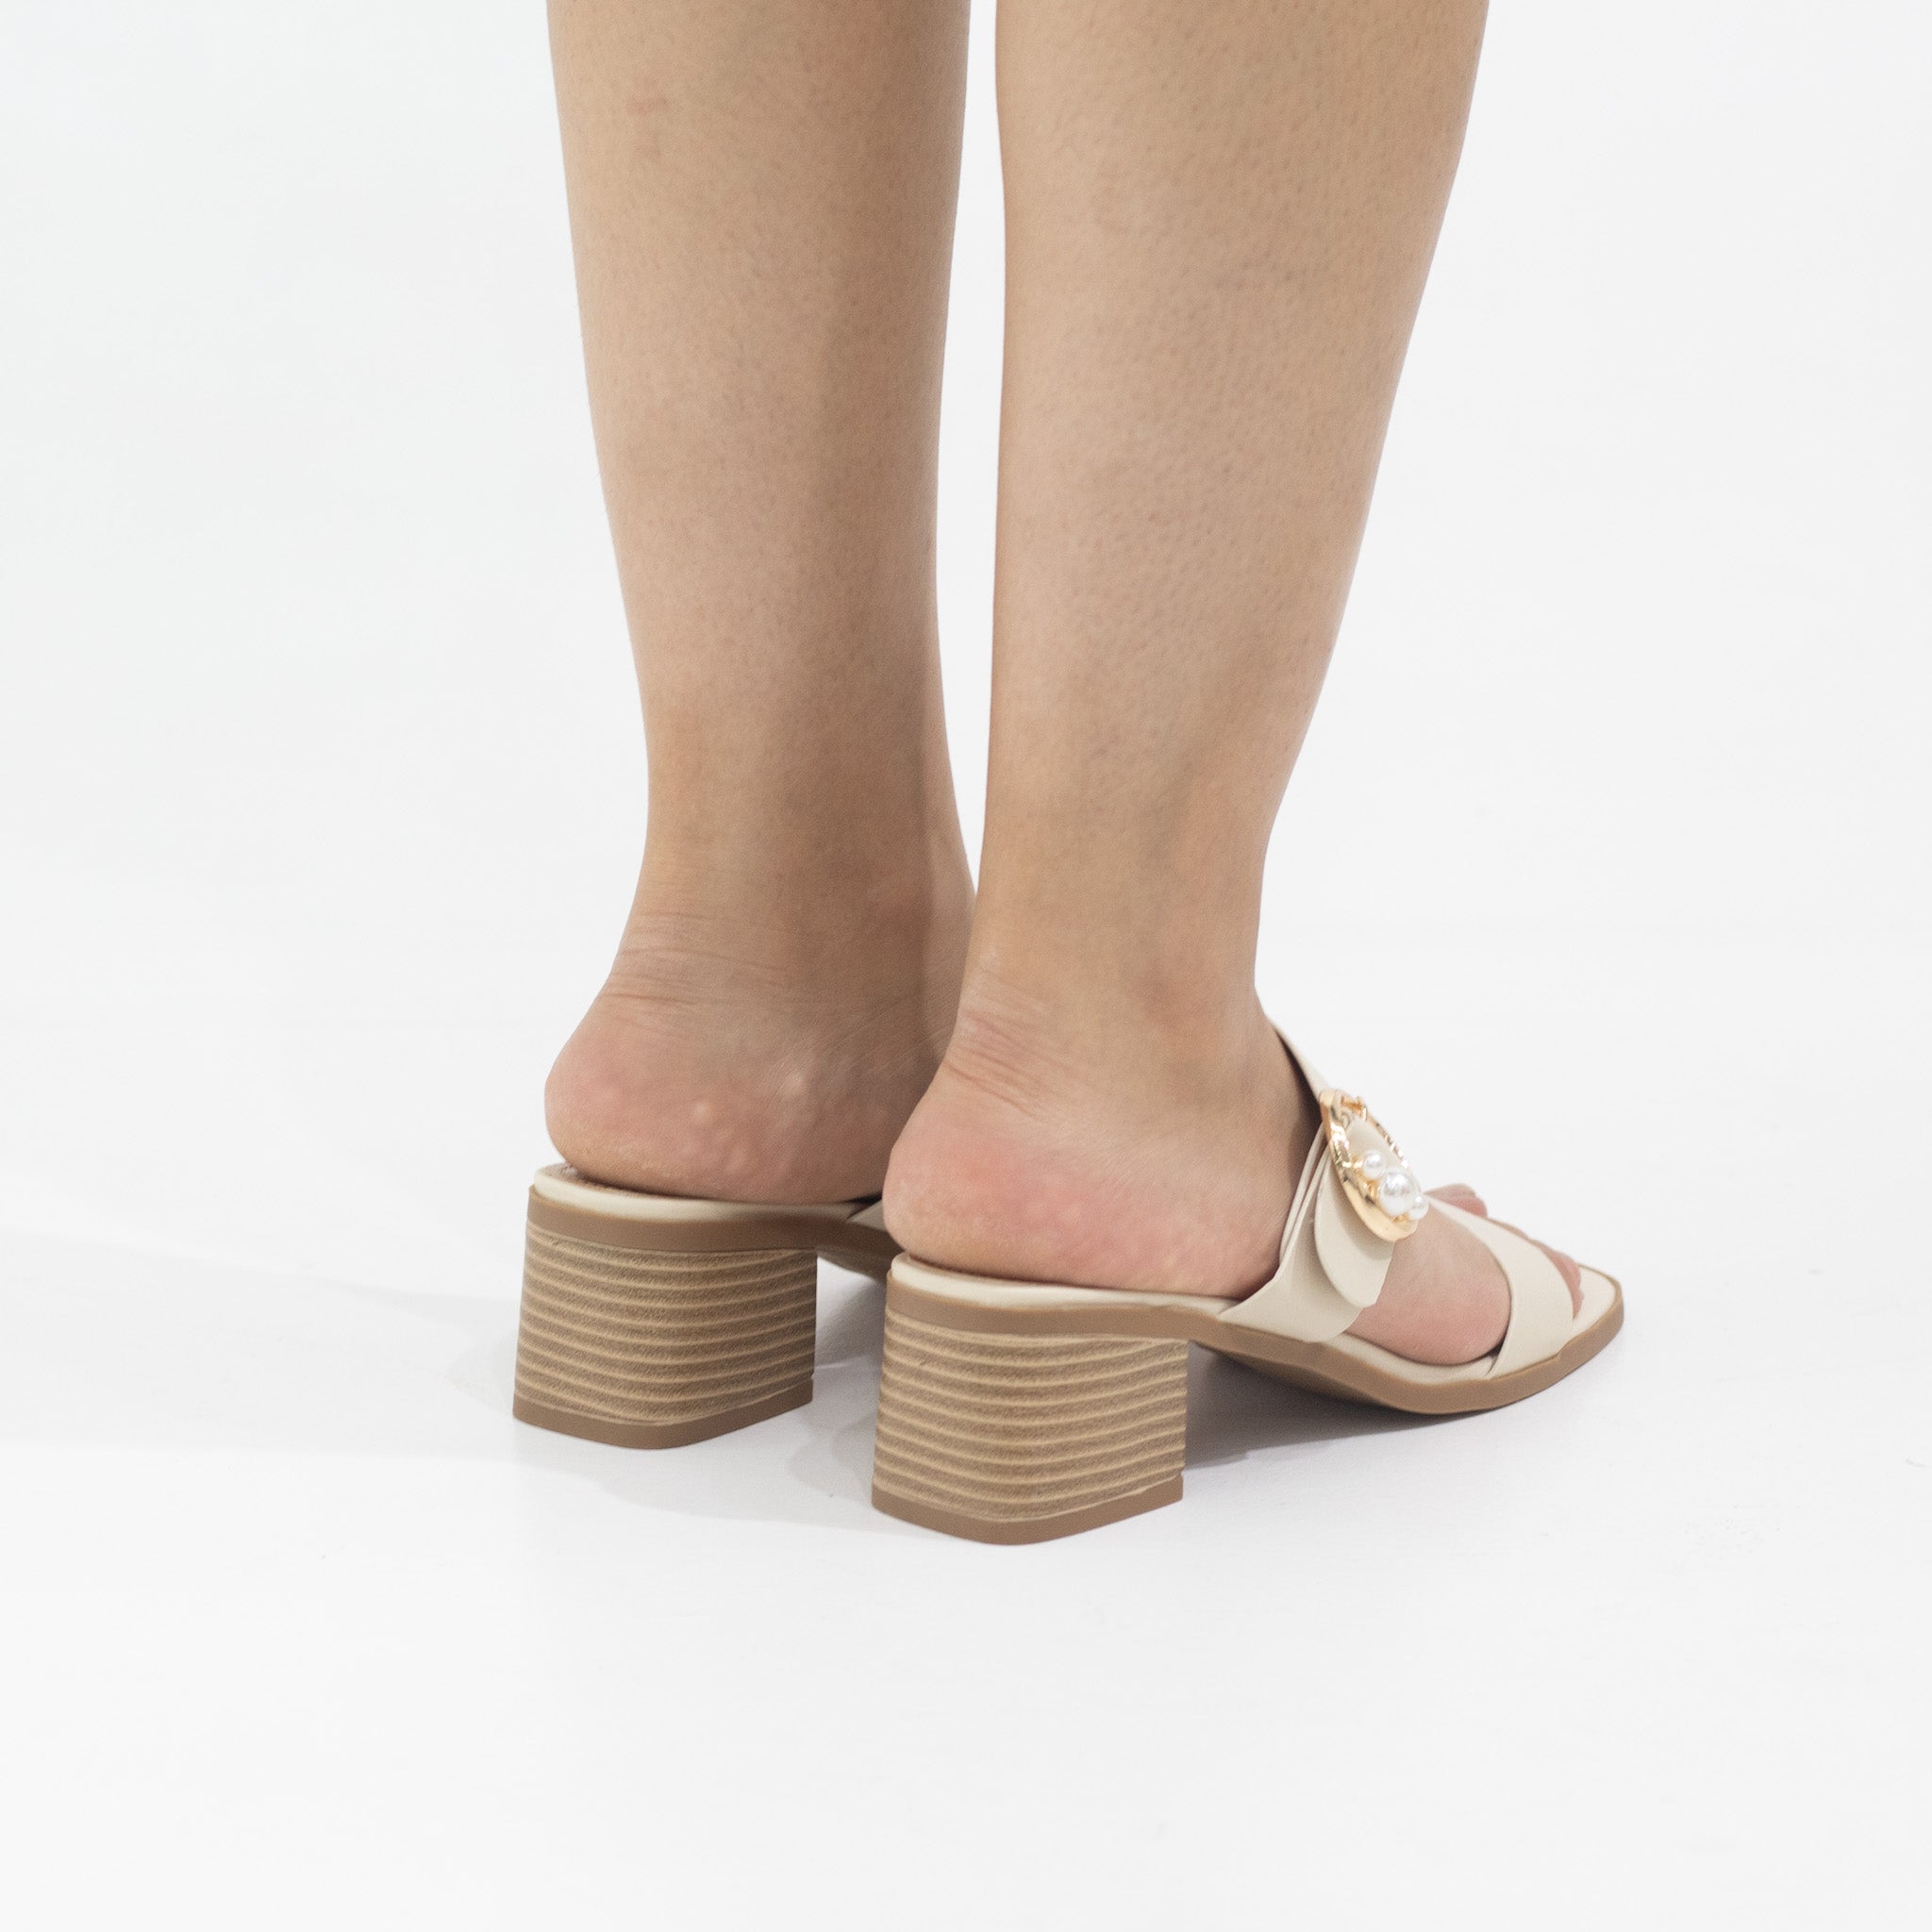 Off-white 5cm heel 2 band slide with buckle oreta